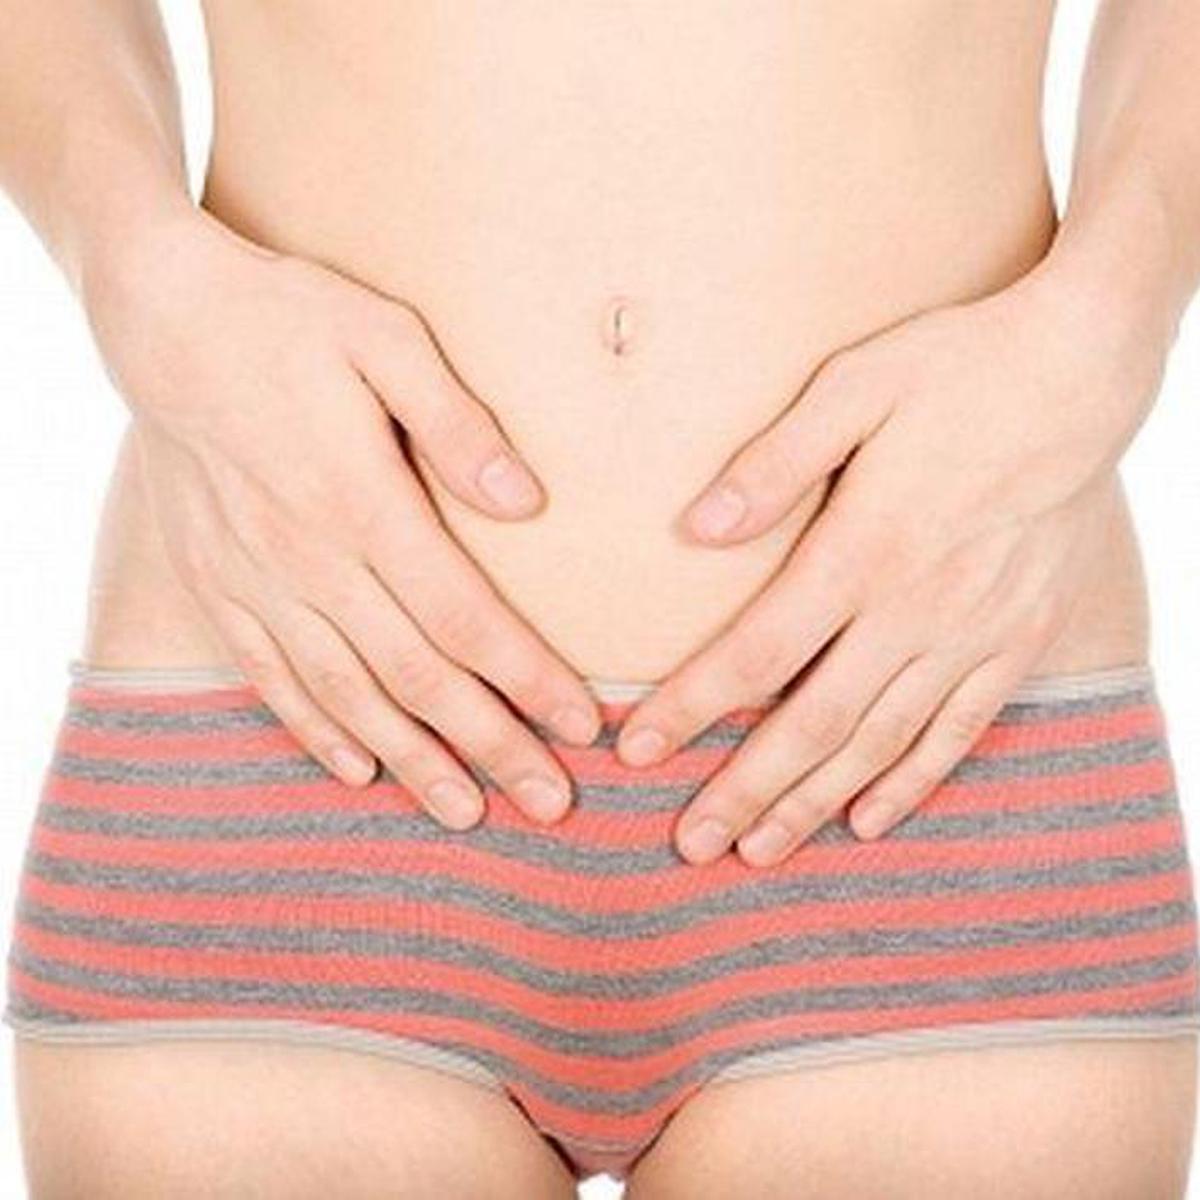 Cairan Vagina Tak Hanya Keluar Saat Orgasme? - Health Liputan6.com